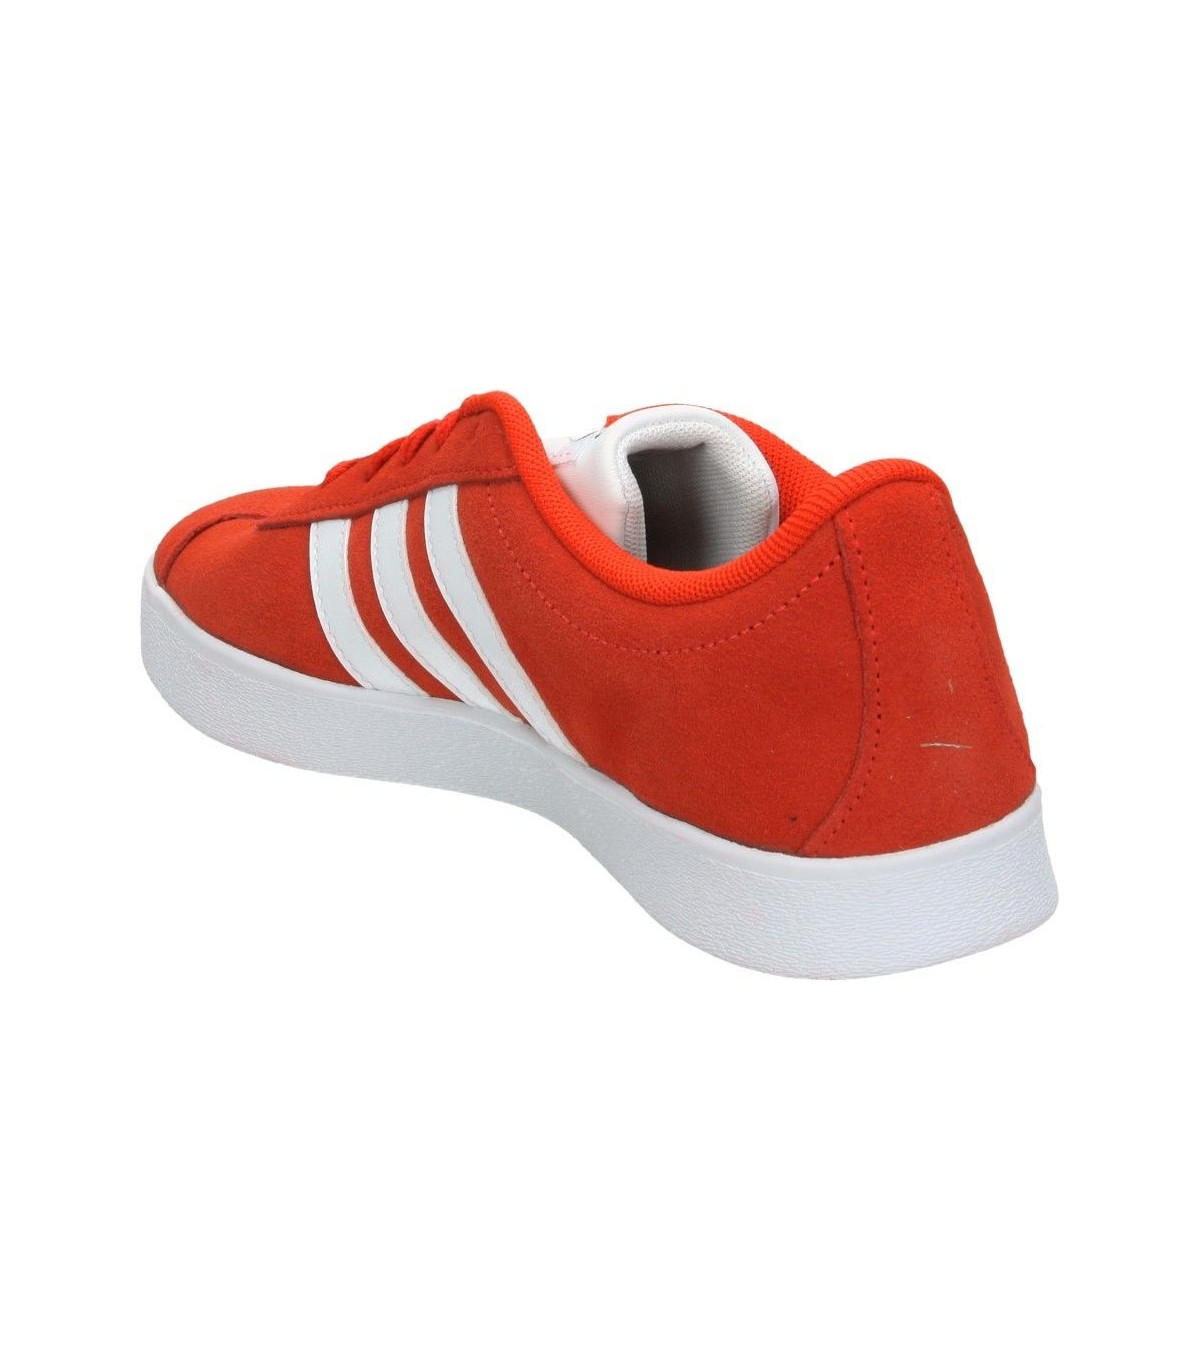 Zapatillas adidas VL Court 2.0 f36377 roja